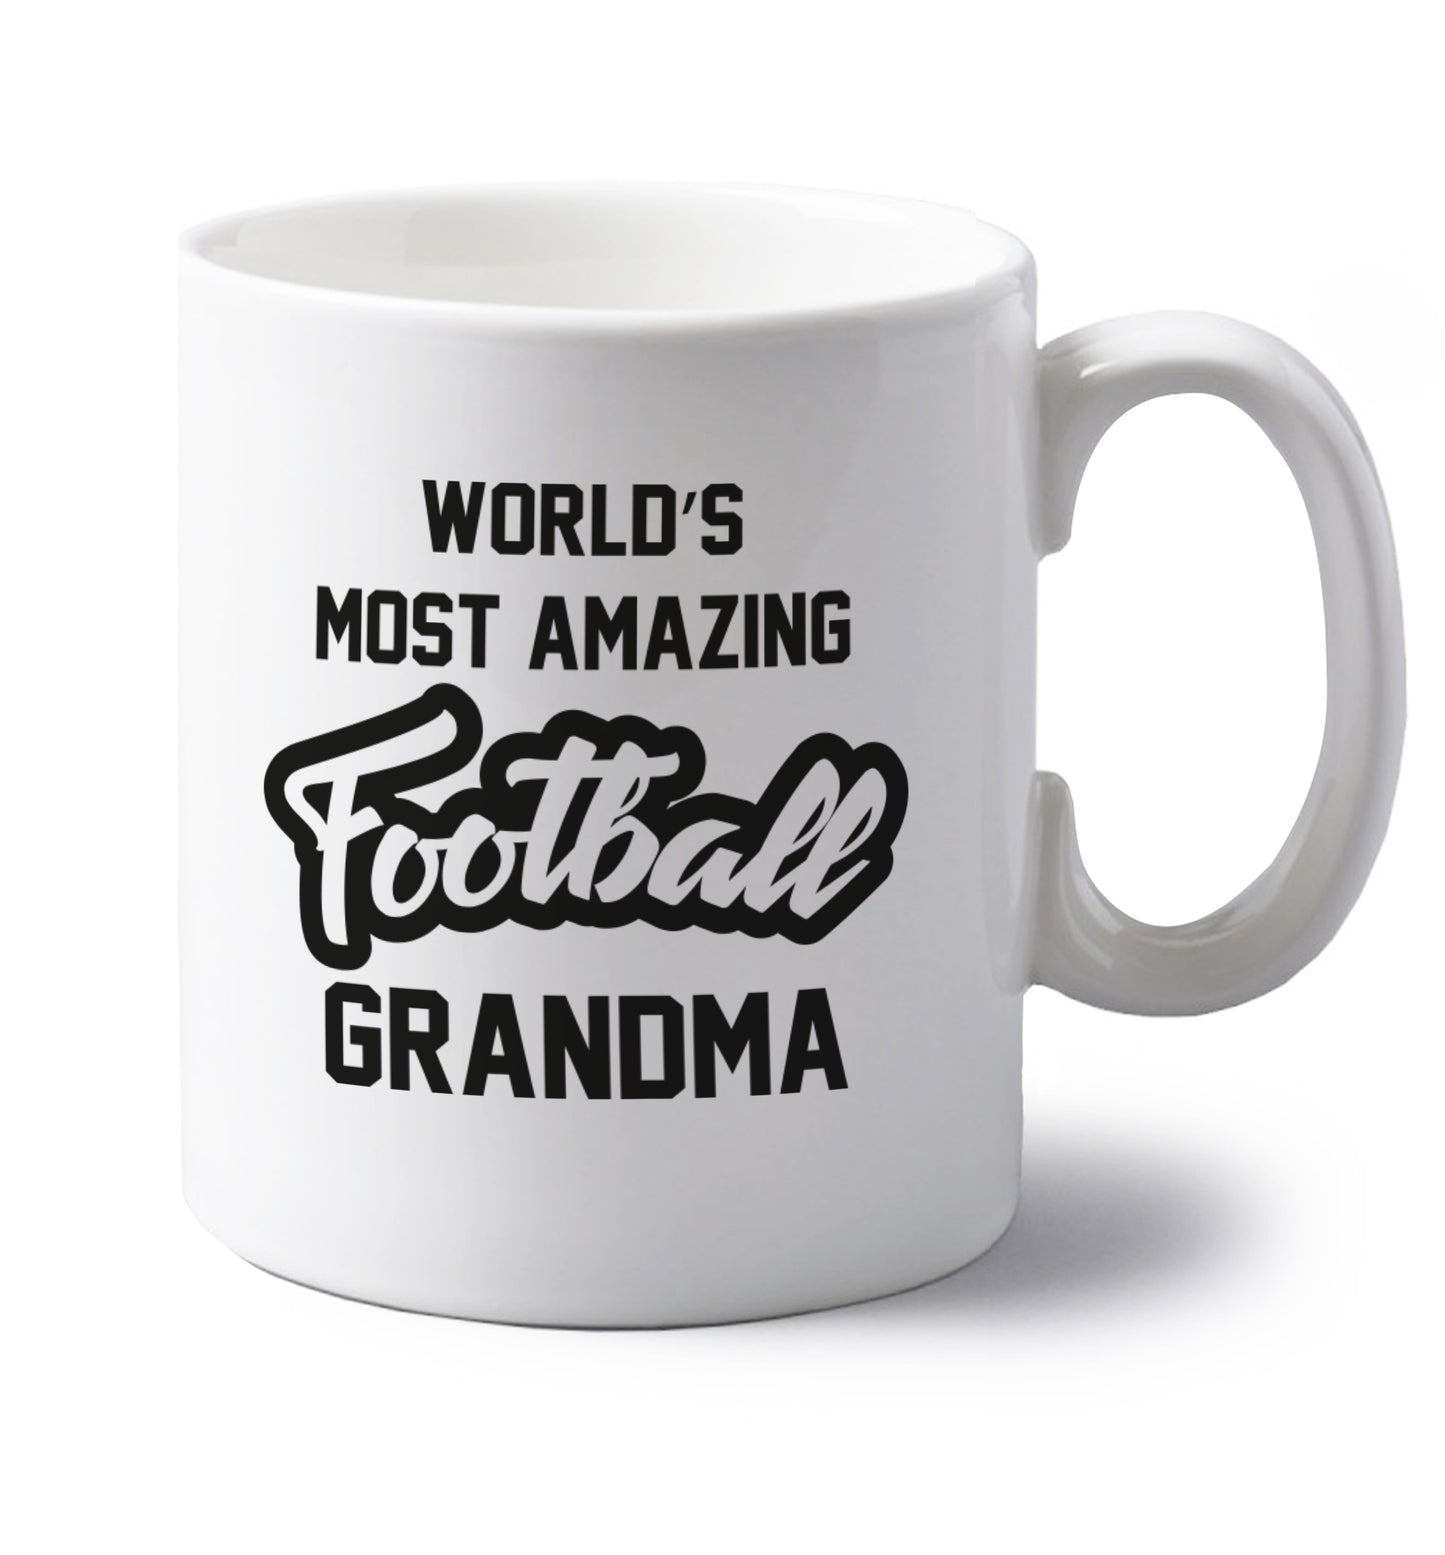 Worlds most amazing football grandma left handed white ceramic mug 